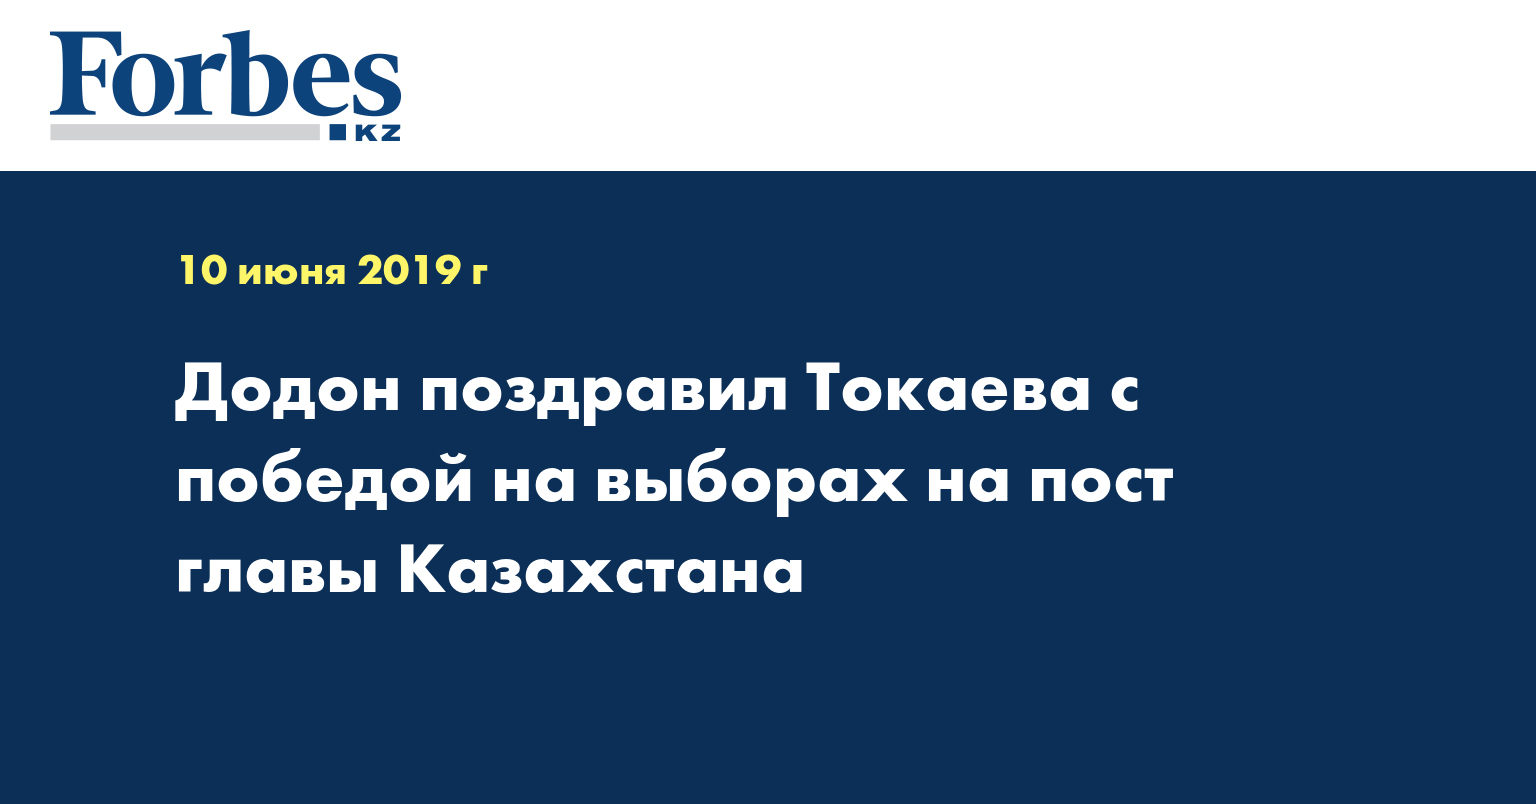 Додон поздравил Токаева с победой на выборах на пост главы Казахстана